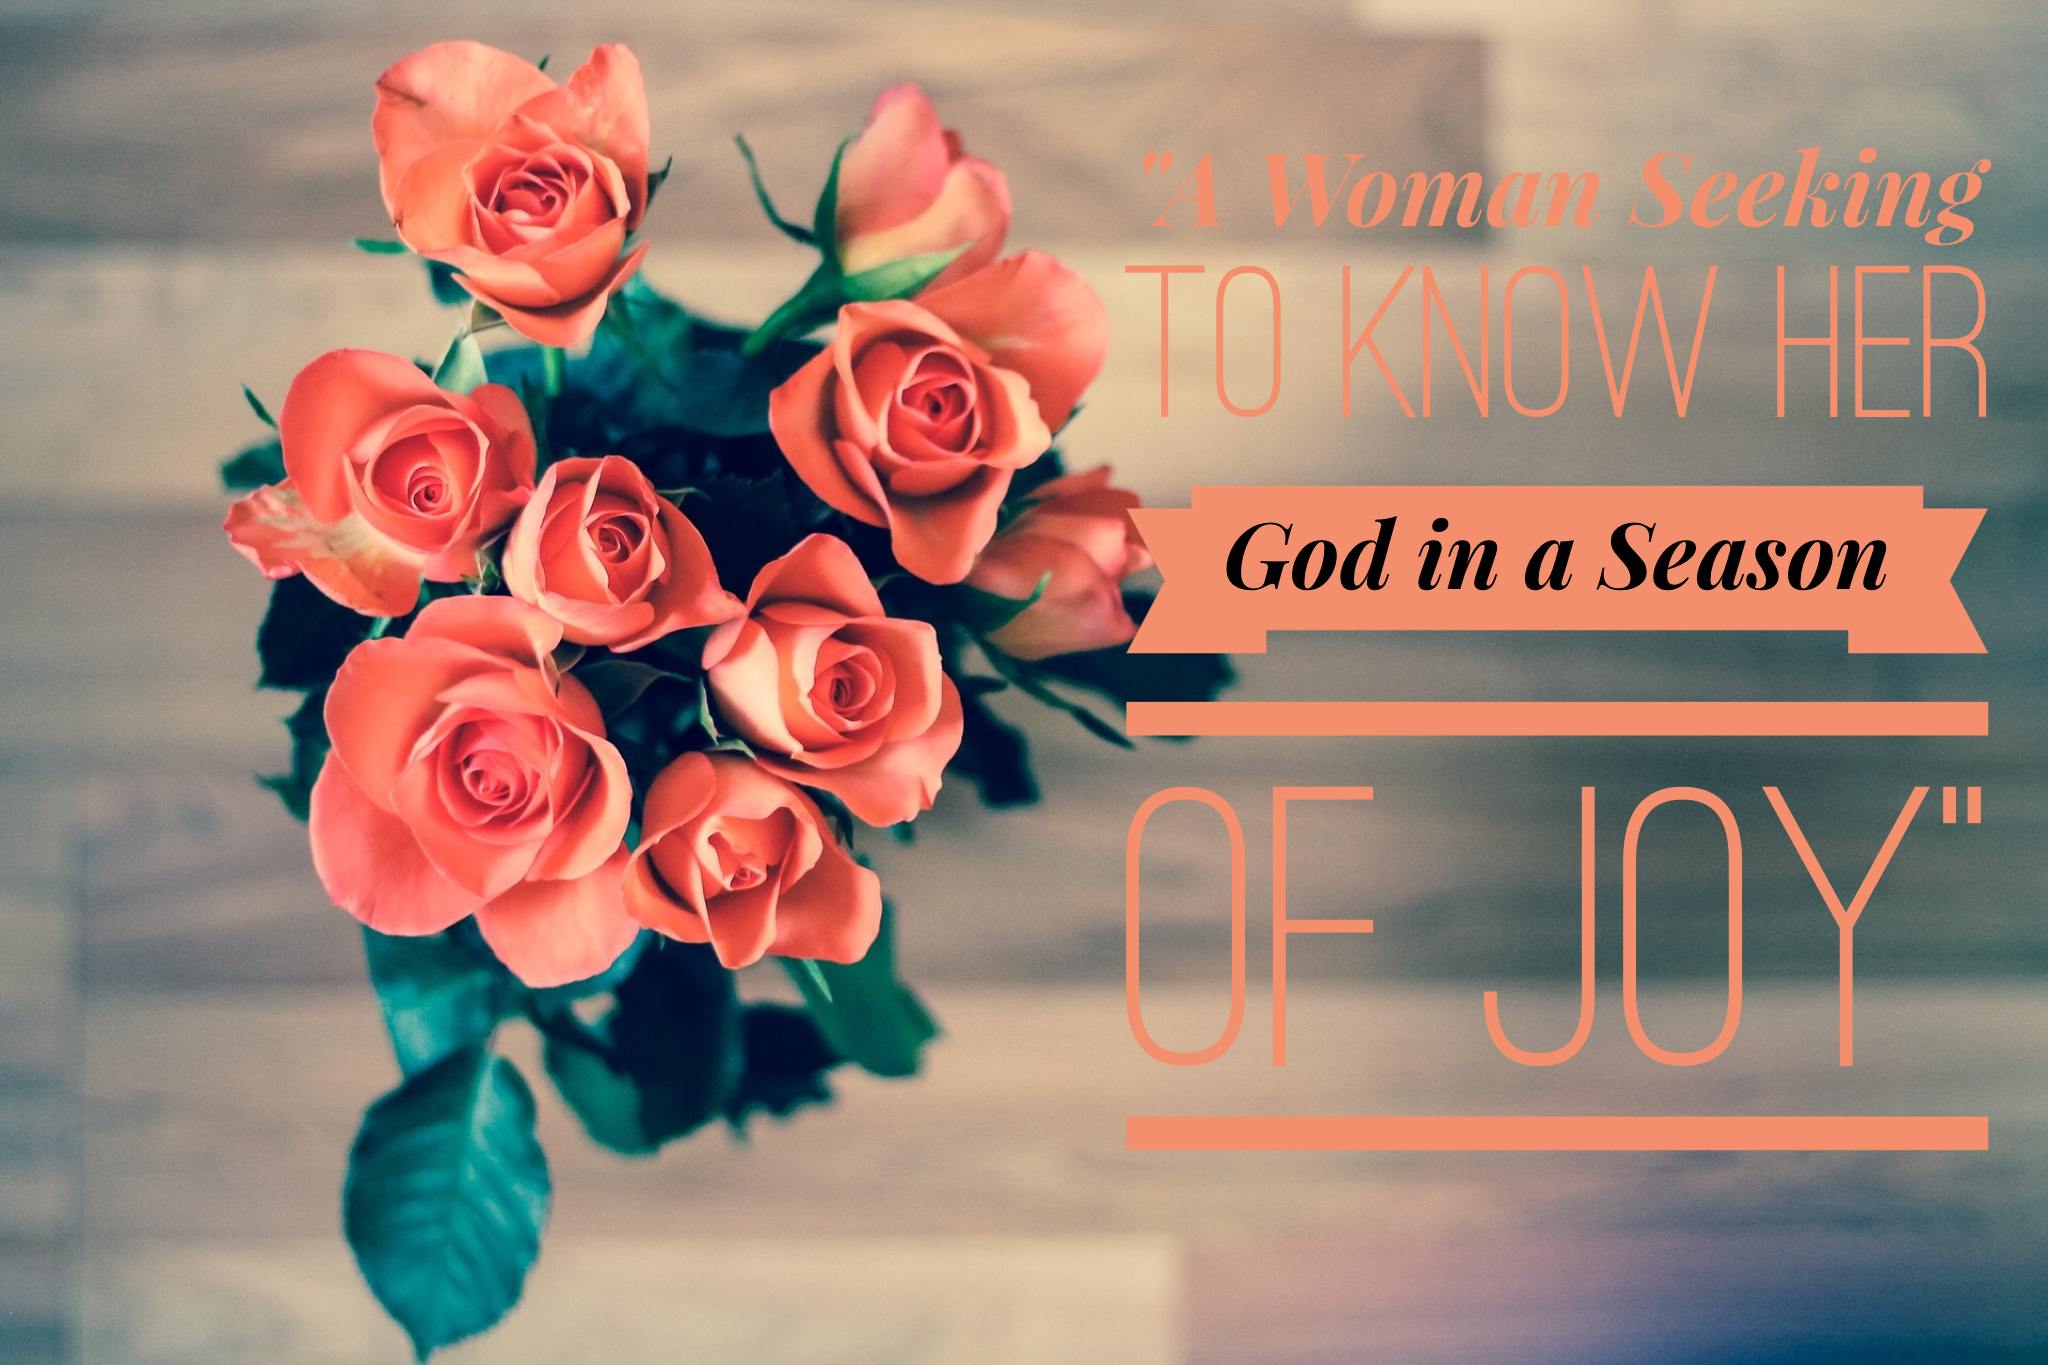 A Woman Seeking to Know Her God in a Season of Joy | www.codyandras.com/blog/2017/7/29/a-woman-seeking-to-know-her-god-in-a-season-of-joy